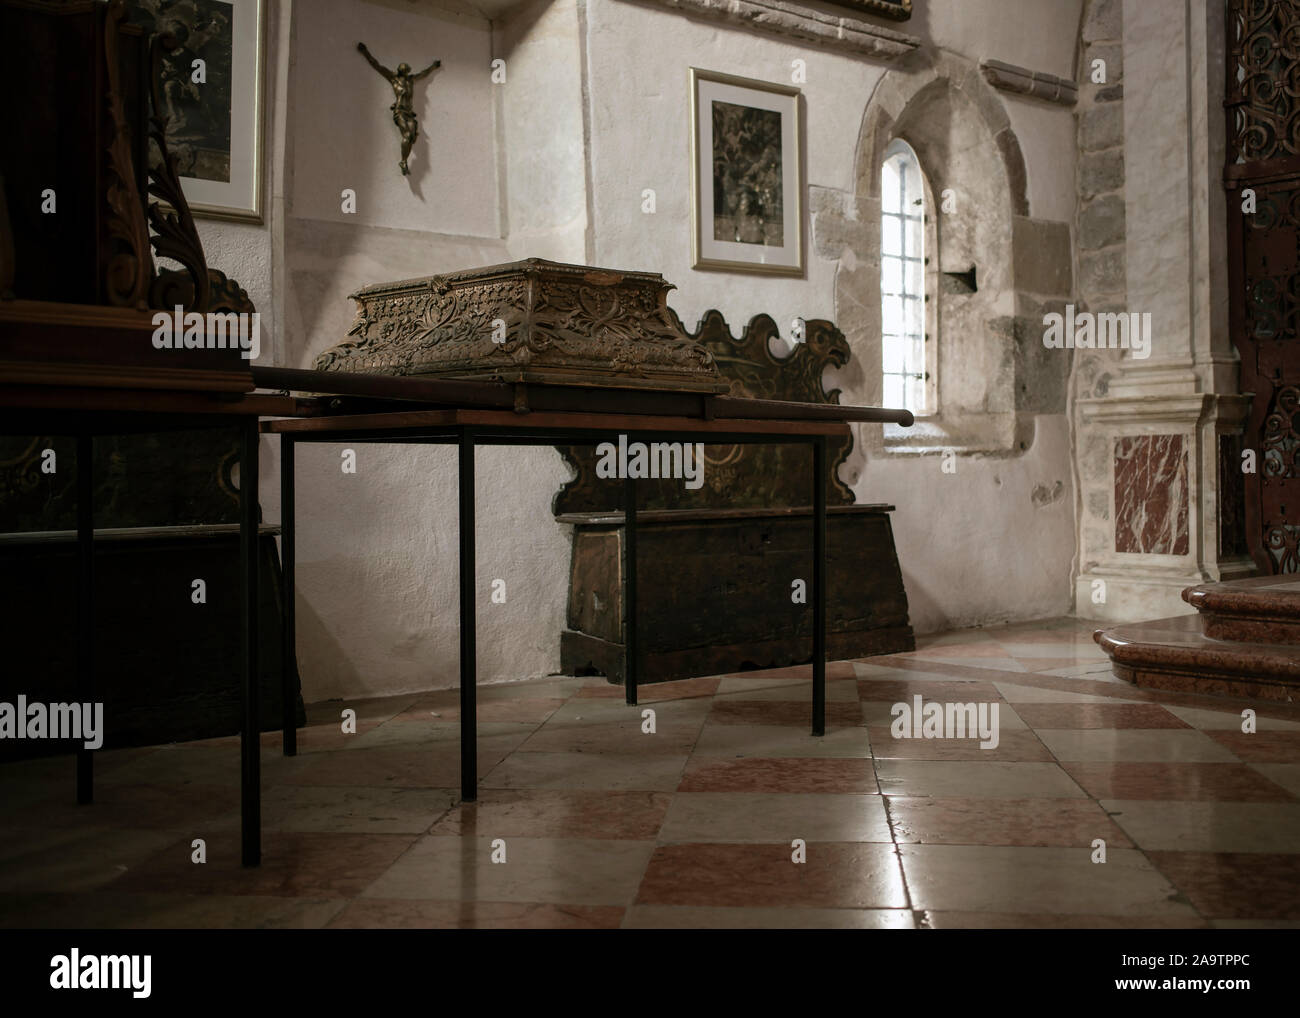 Kotor, Montenegro - Part of the interior of the Cathedral of Saint Tryphon (Sveti Tripun) Stock Photo